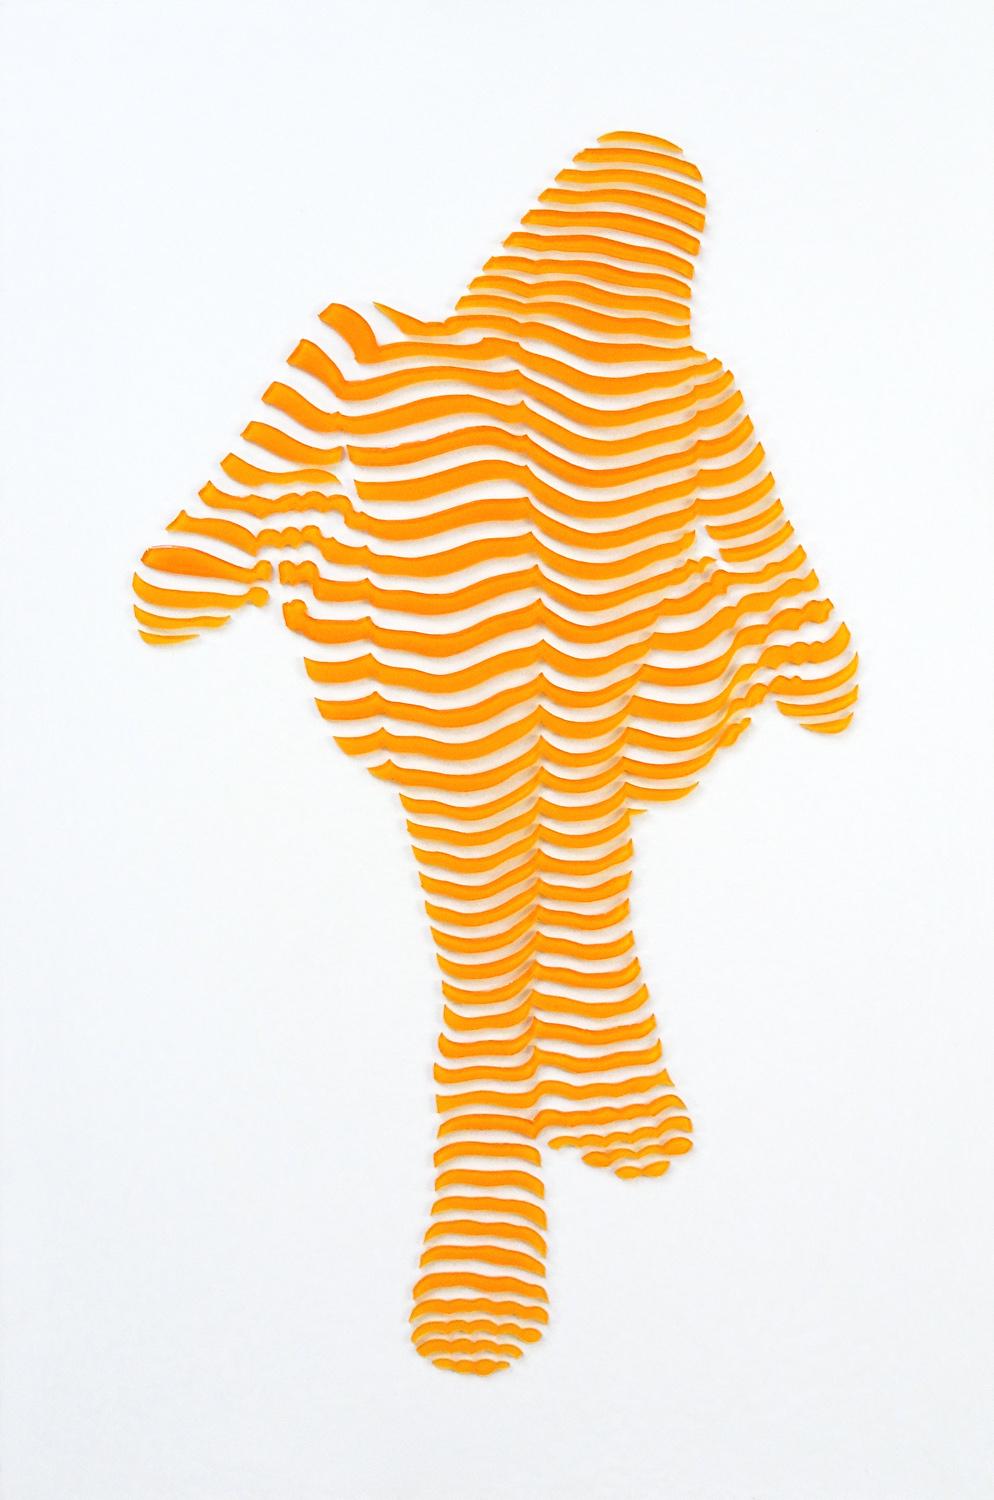 Stripe Pose Study #45 - Mixed Media Art by Philippe Jestin